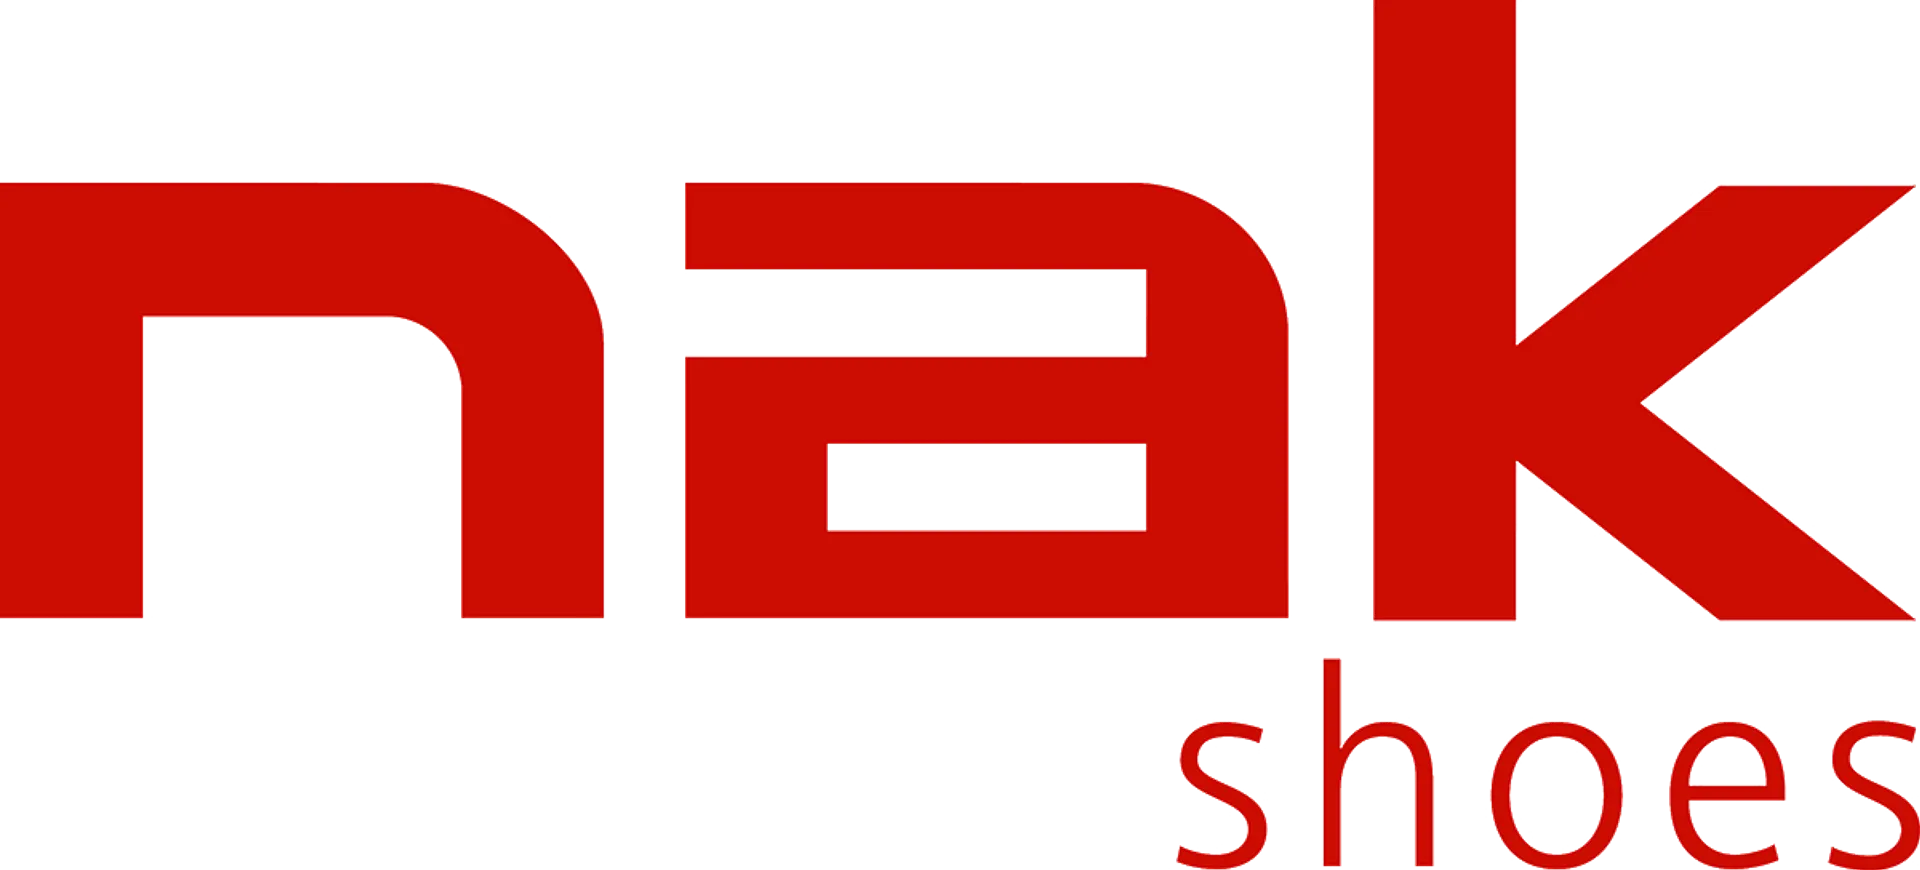 NAK logo